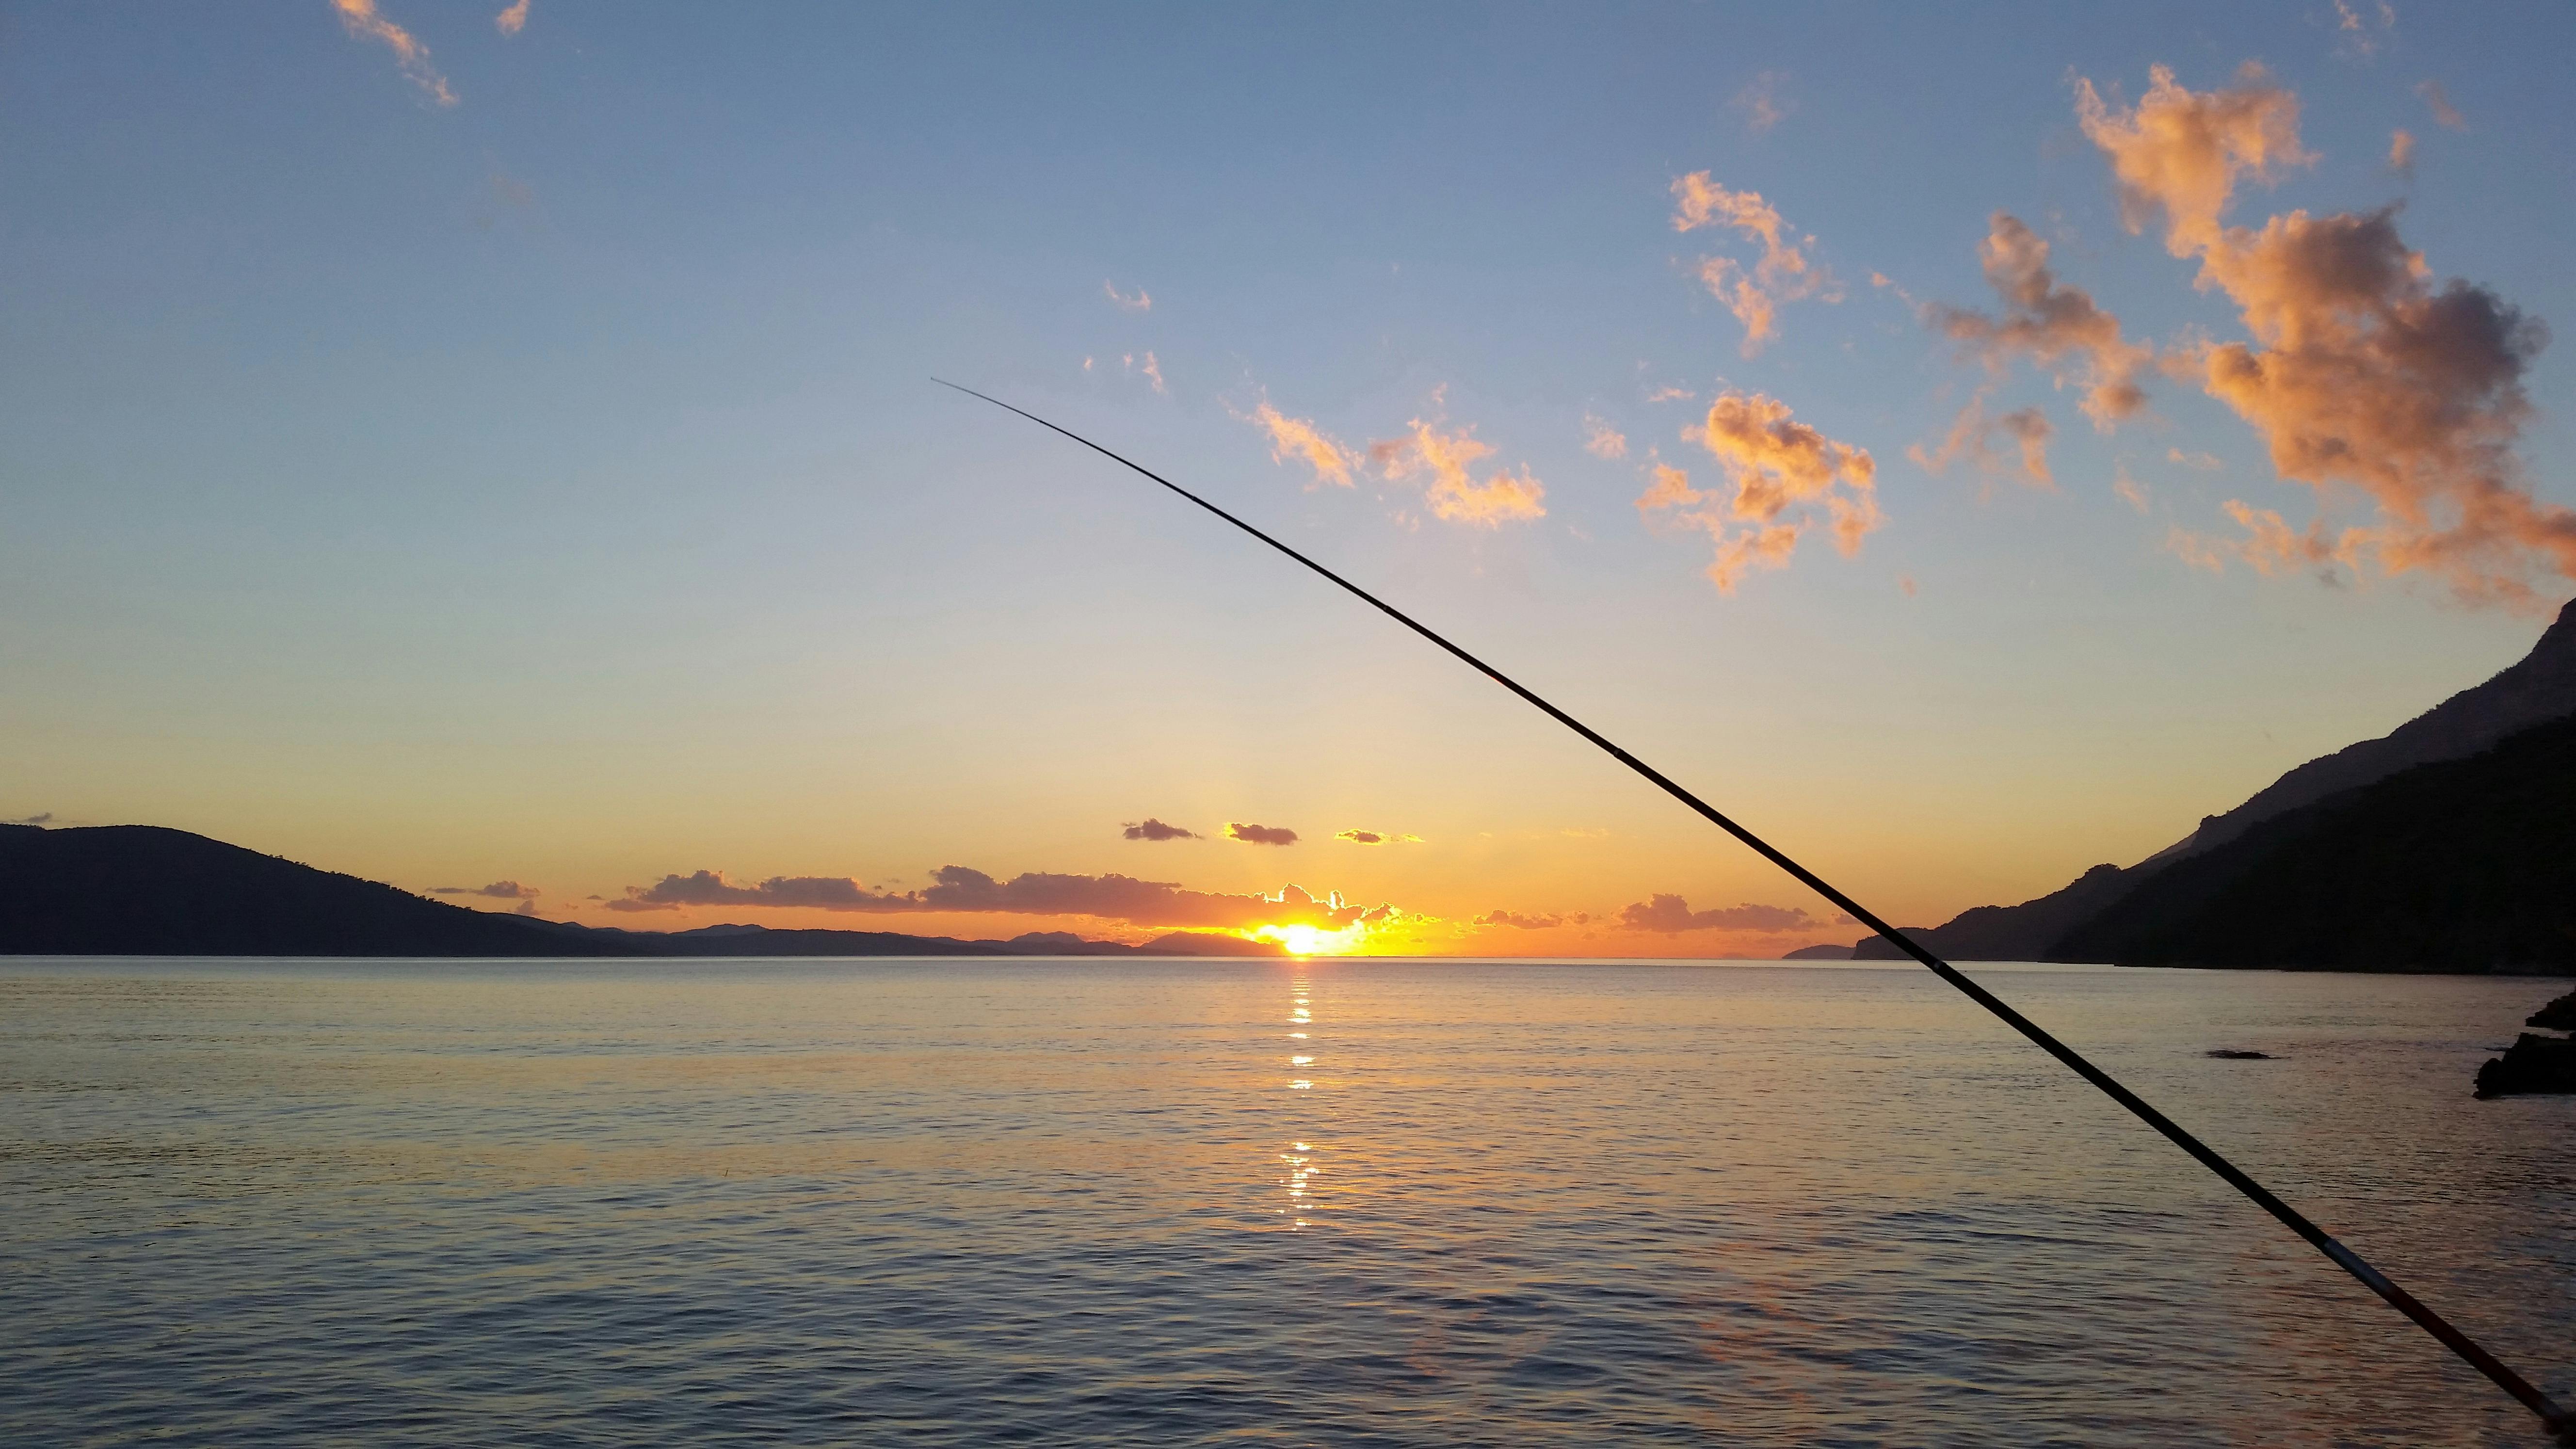 fishing-rod-near-body-of-water-during-sunset-free-stock-photo